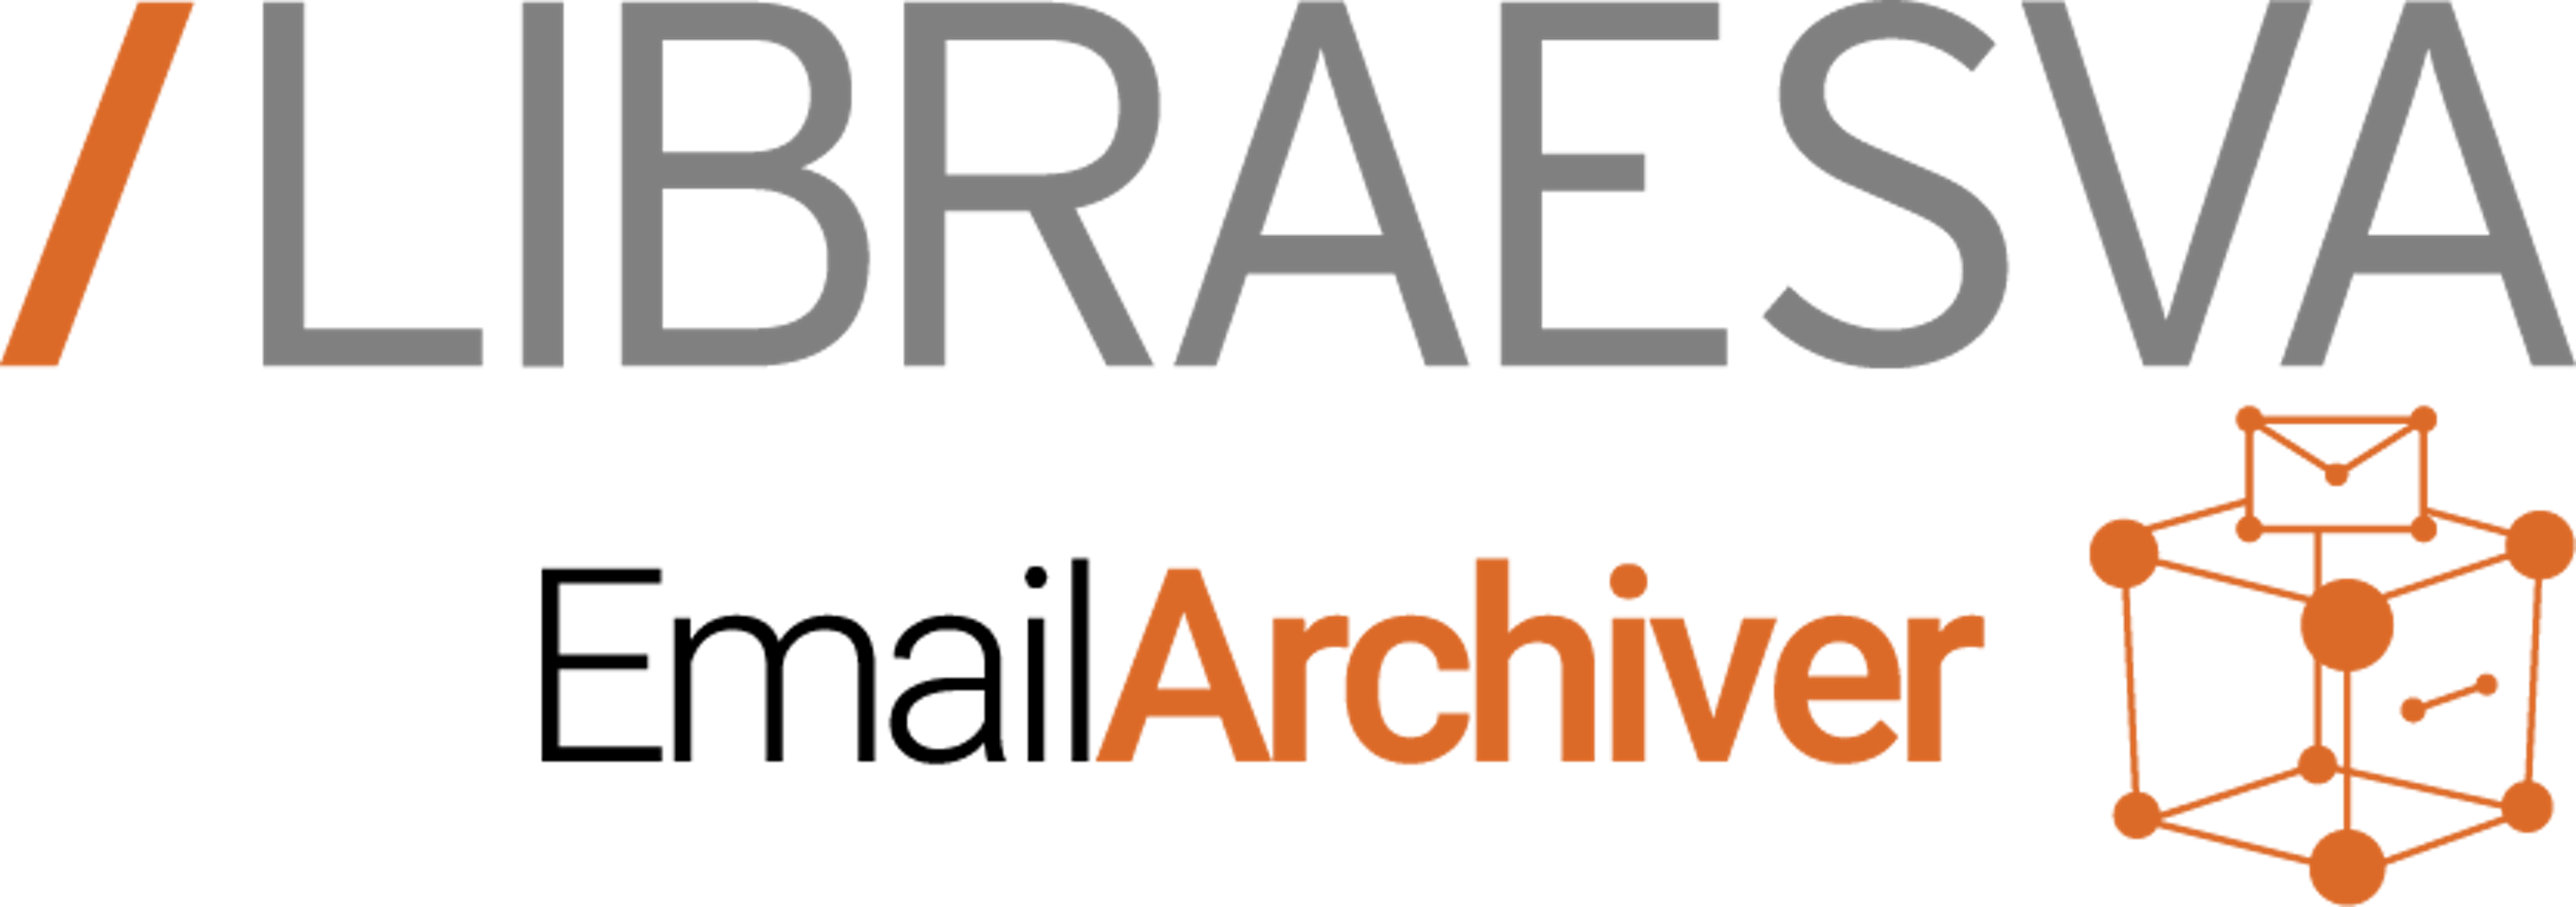 Libraesva Email Archiver Logo